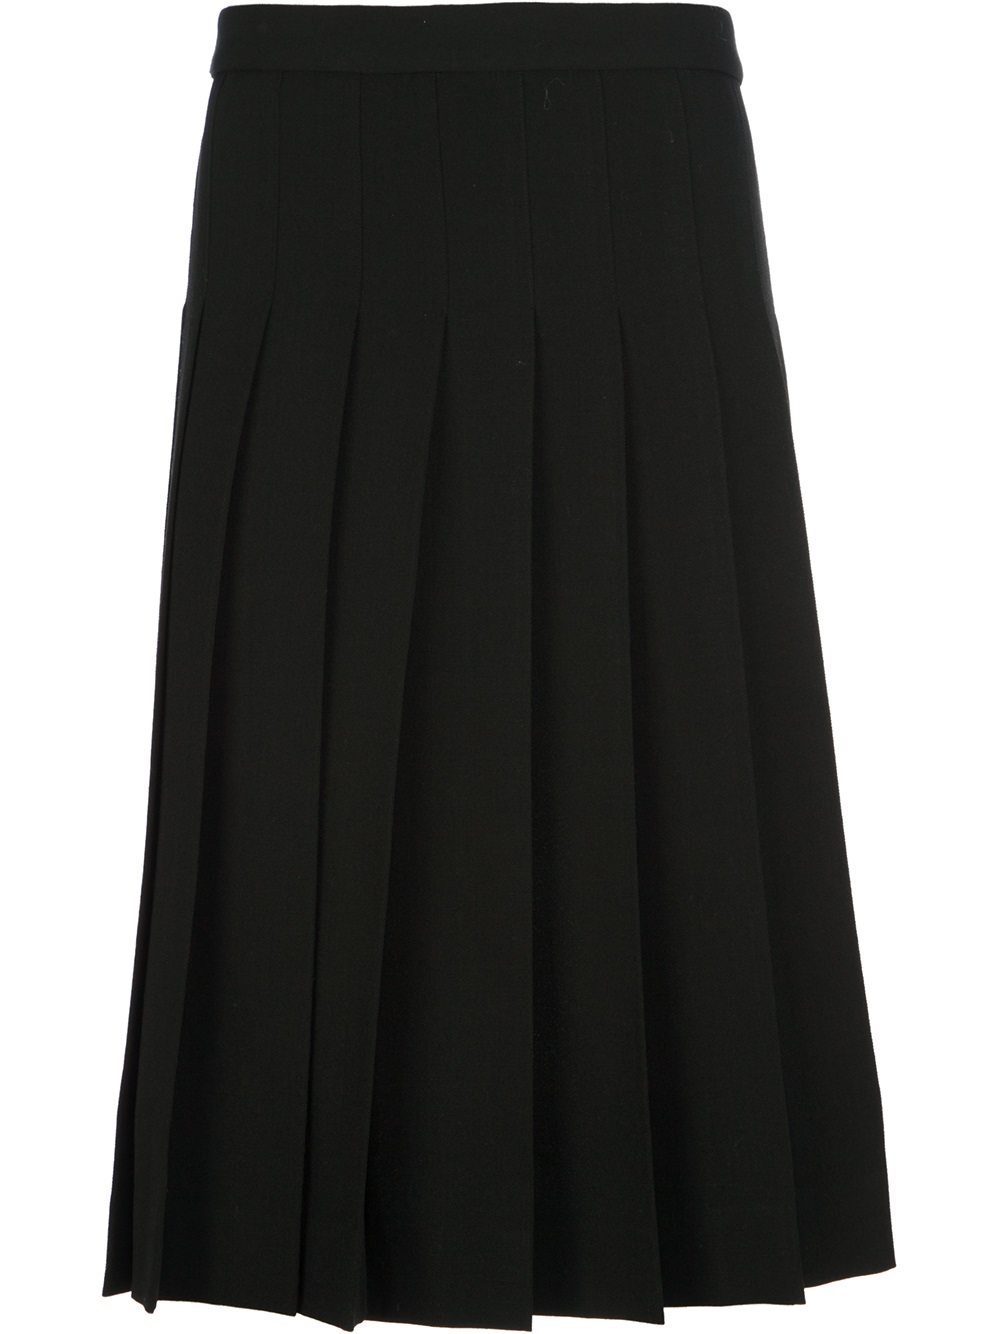 Lyst - Yohji Yamamoto Pleated Apron Skirt in Black for Men